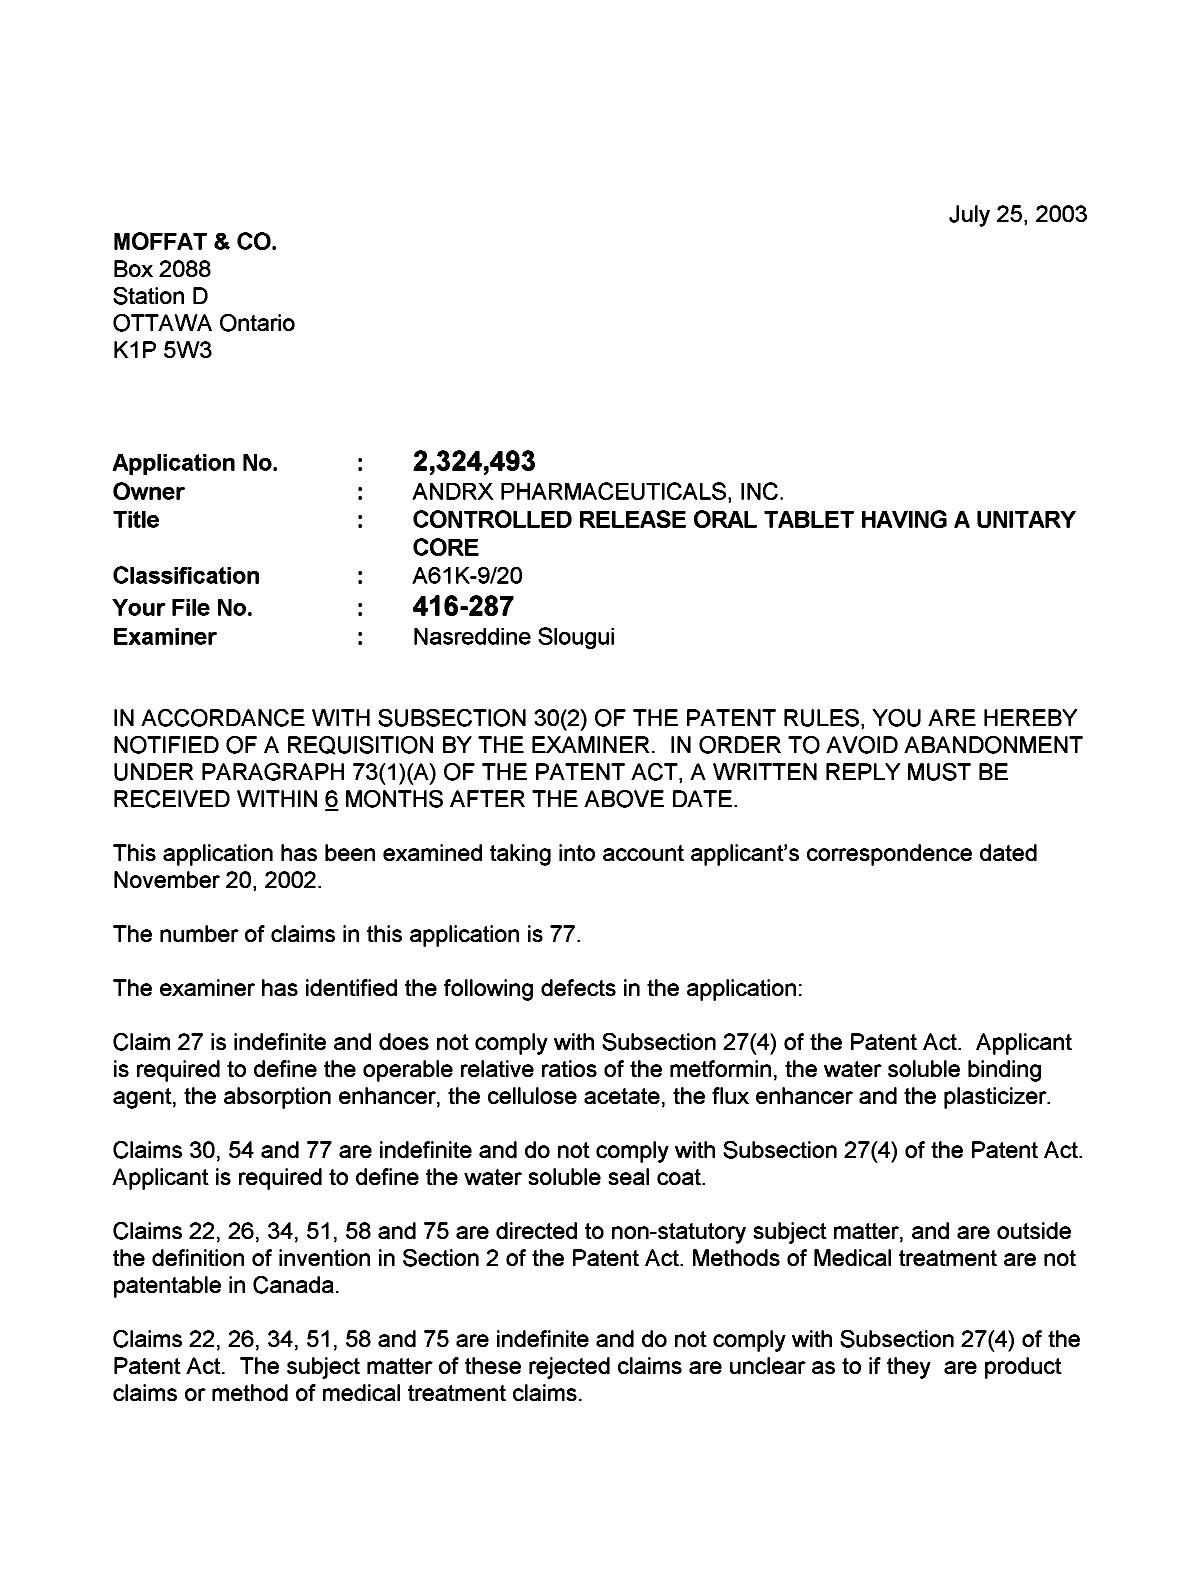 Canadian Patent Document 2324493. Prosecution-Amendment 20030725. Image 1 of 2